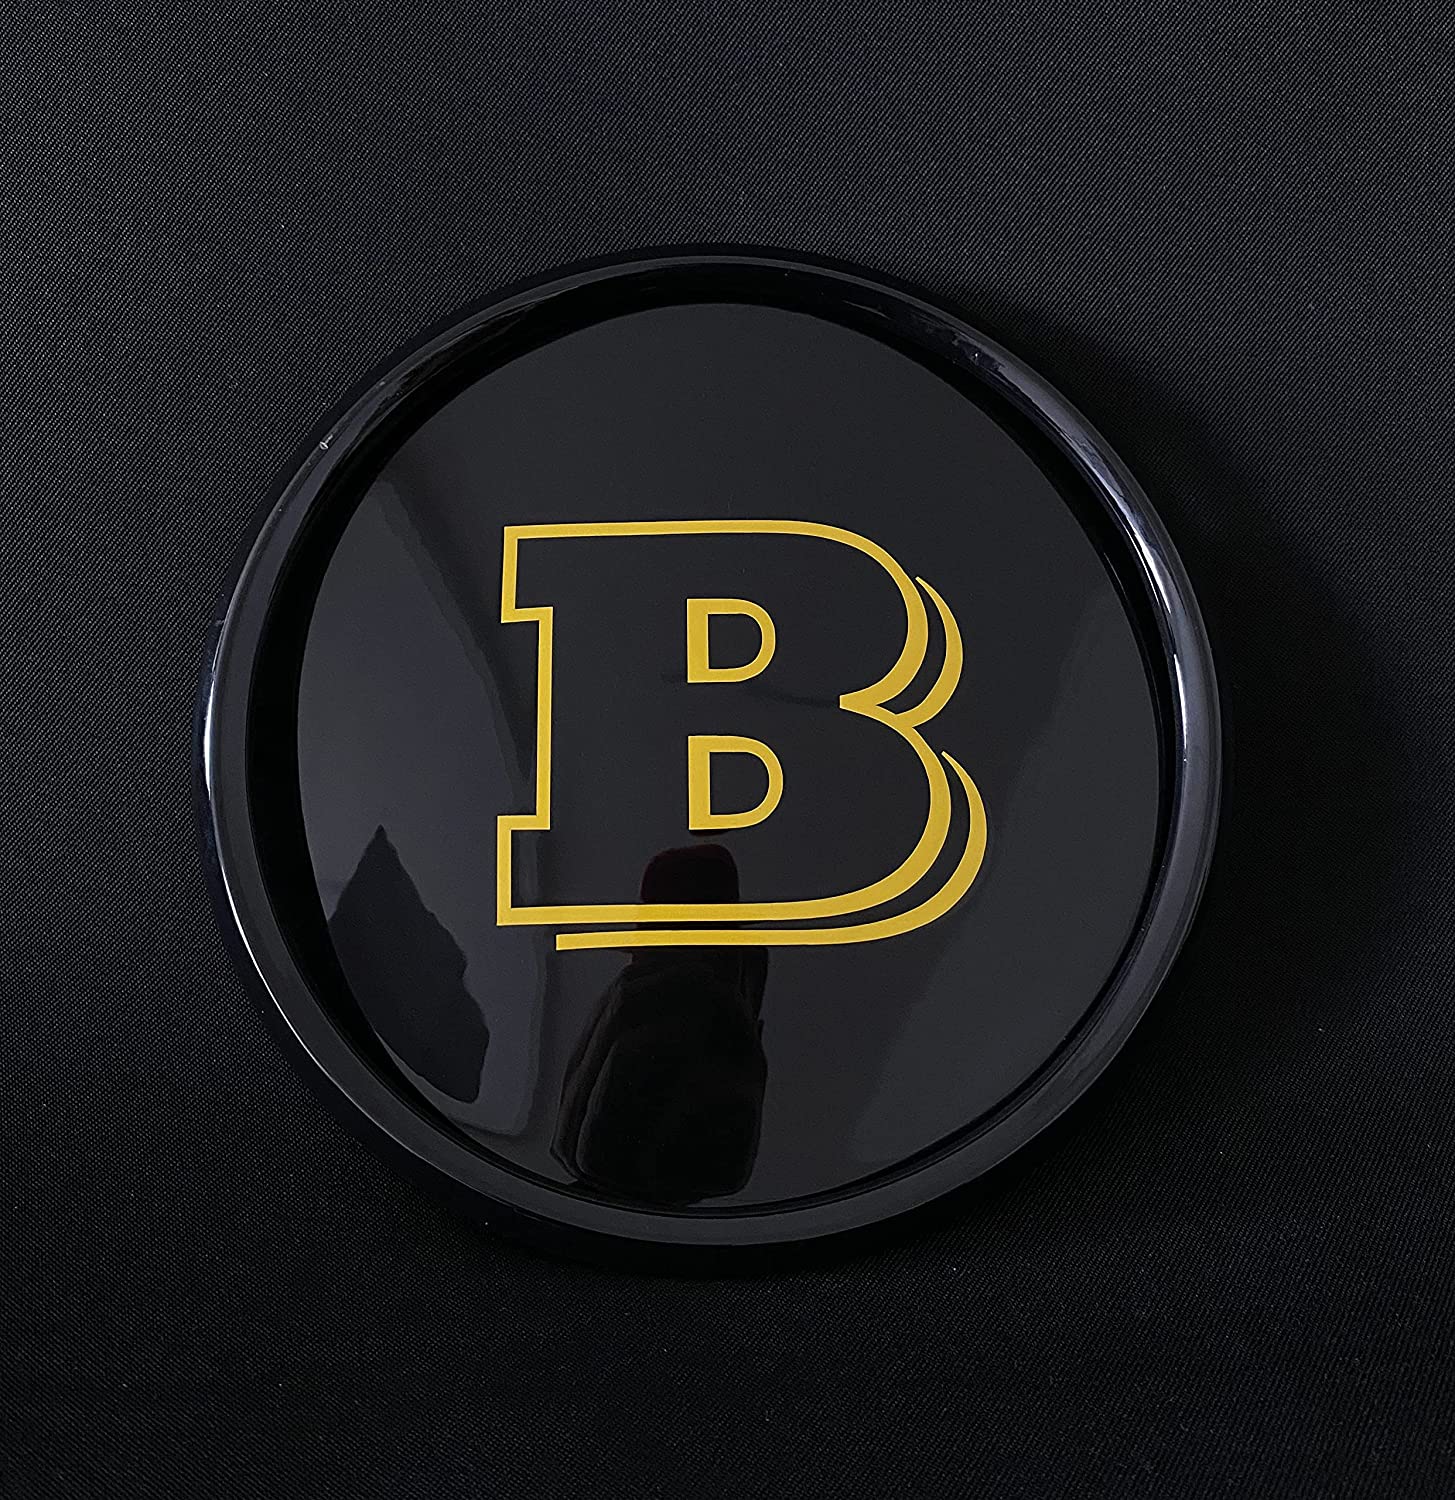 For Mercedes-Benz BRABUS Letters Emblem Car Tailgate Nameplate Sticker  Black - AliExpress